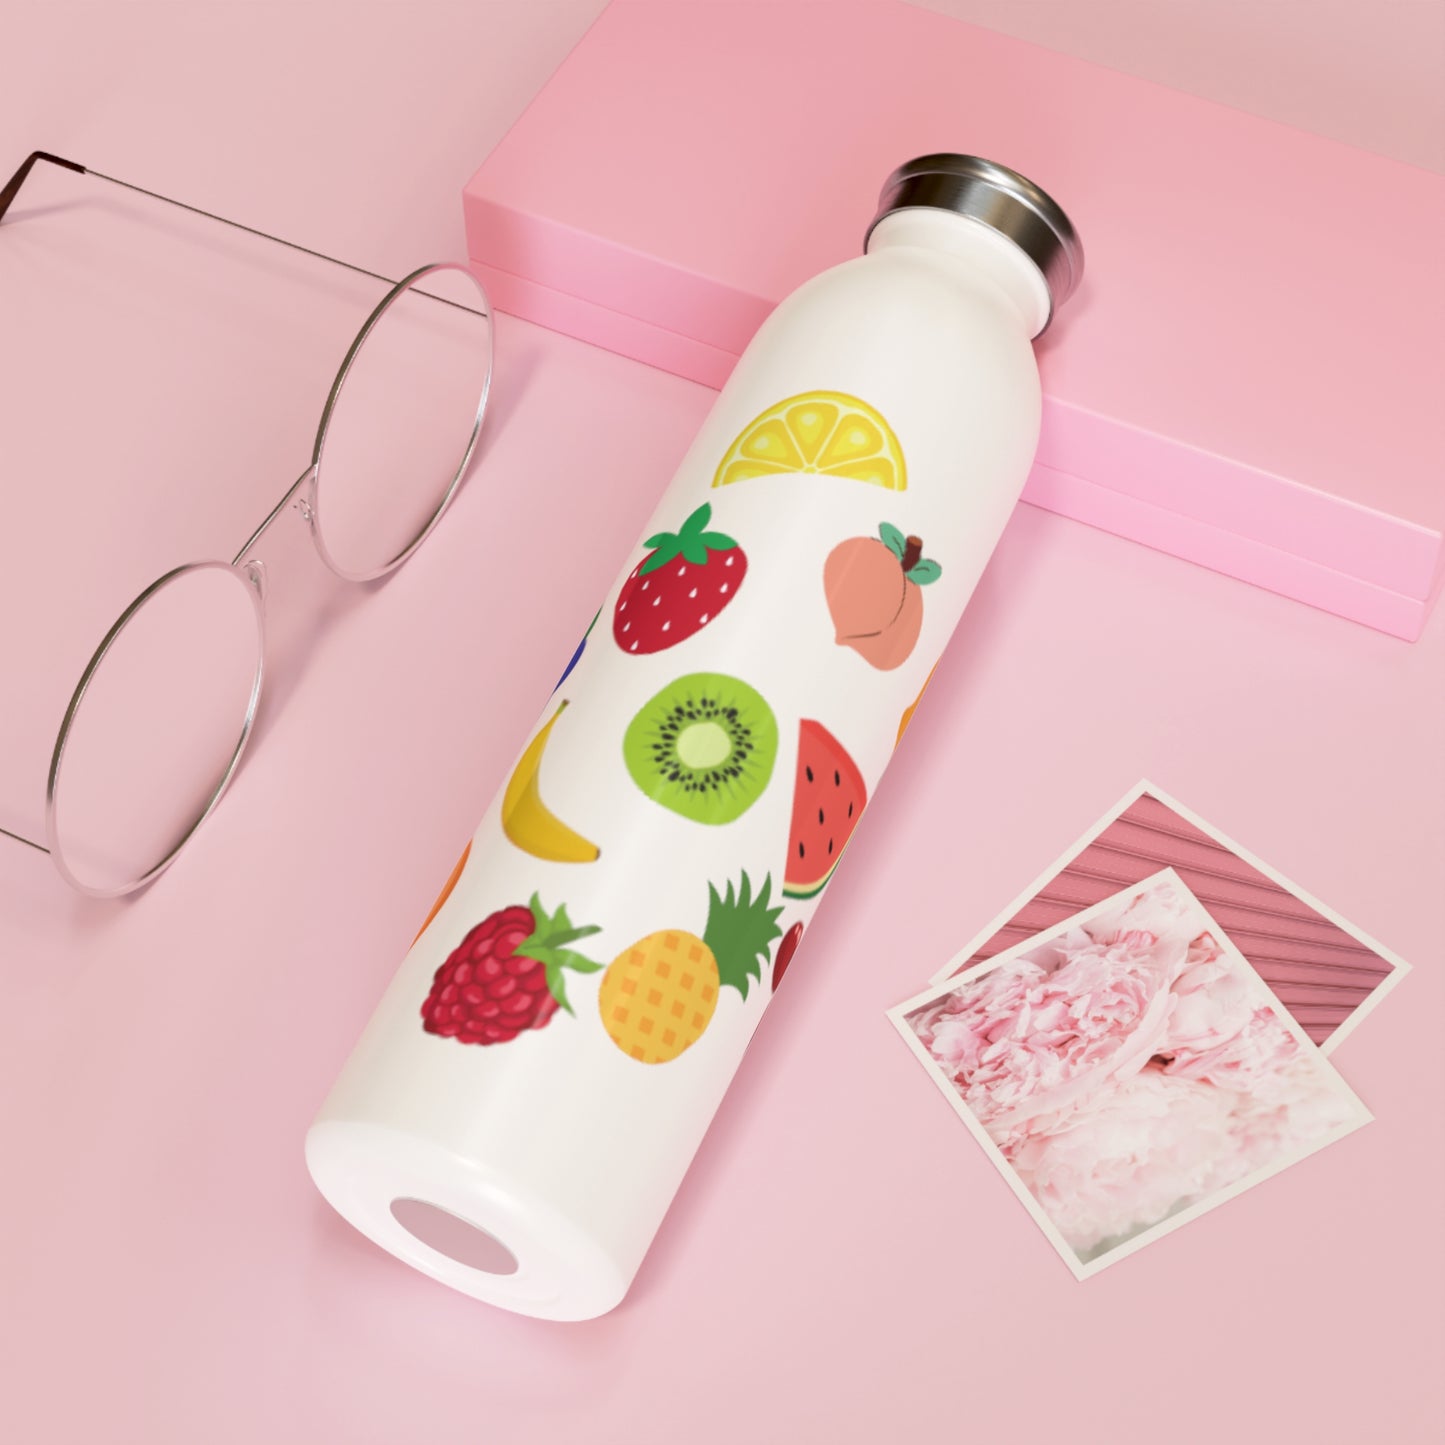 Fruit Design Water Bottle